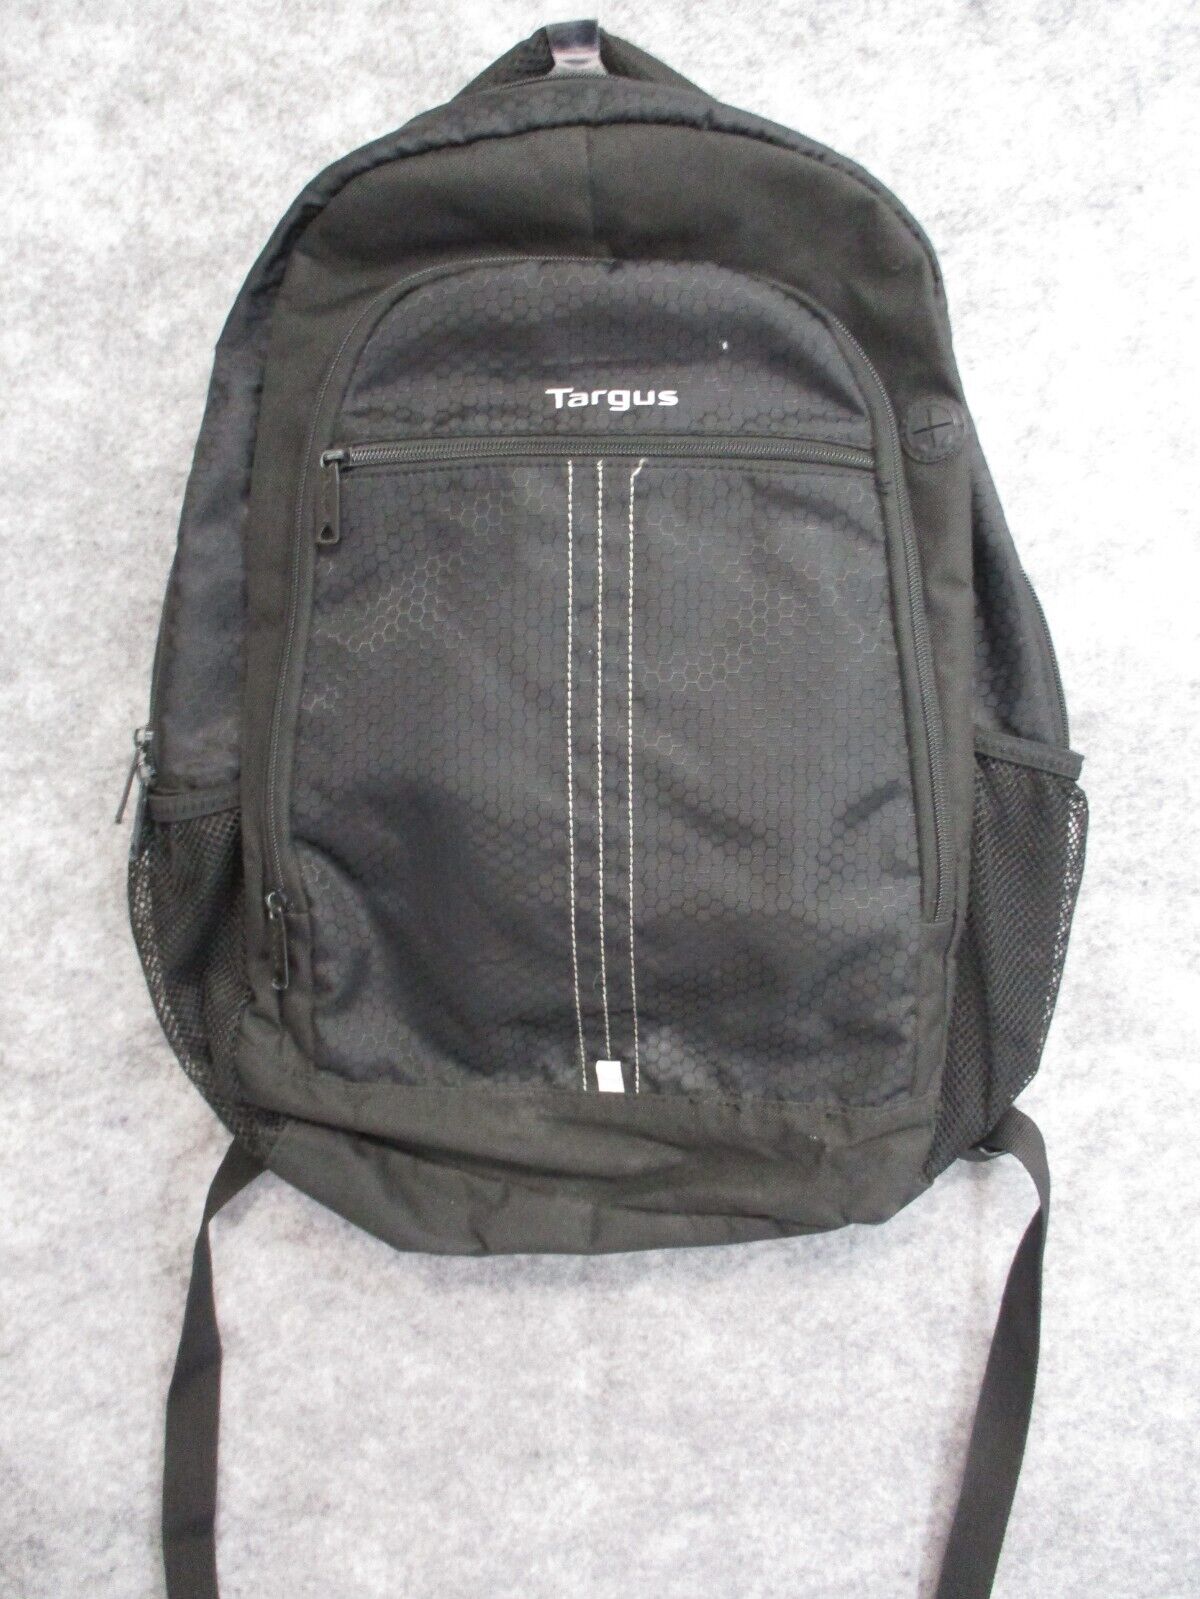 Targus Backpack Padded Laptop Sleeve Mesh Computer 3 Zip Pocket Black Adjustable